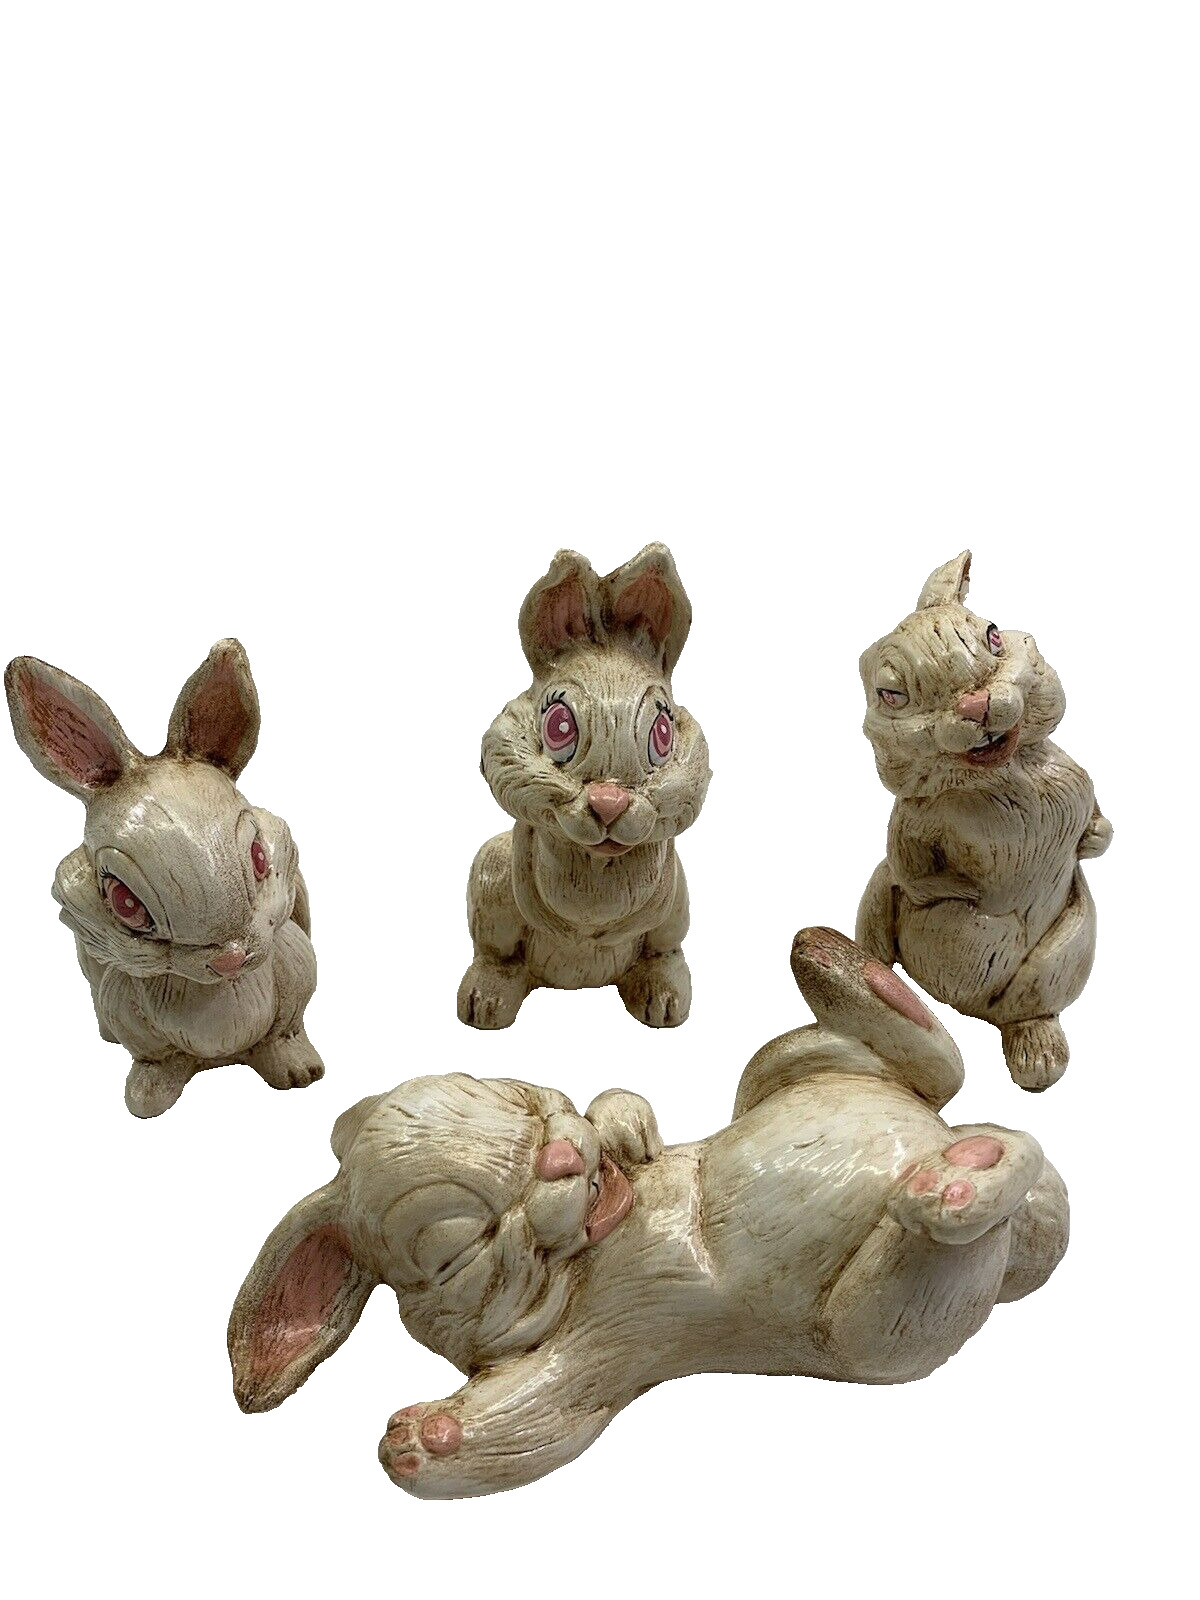 Vintage Ceramic Bunny Rabbits Figurines Set of 4 Retro Decor Creepy Cute